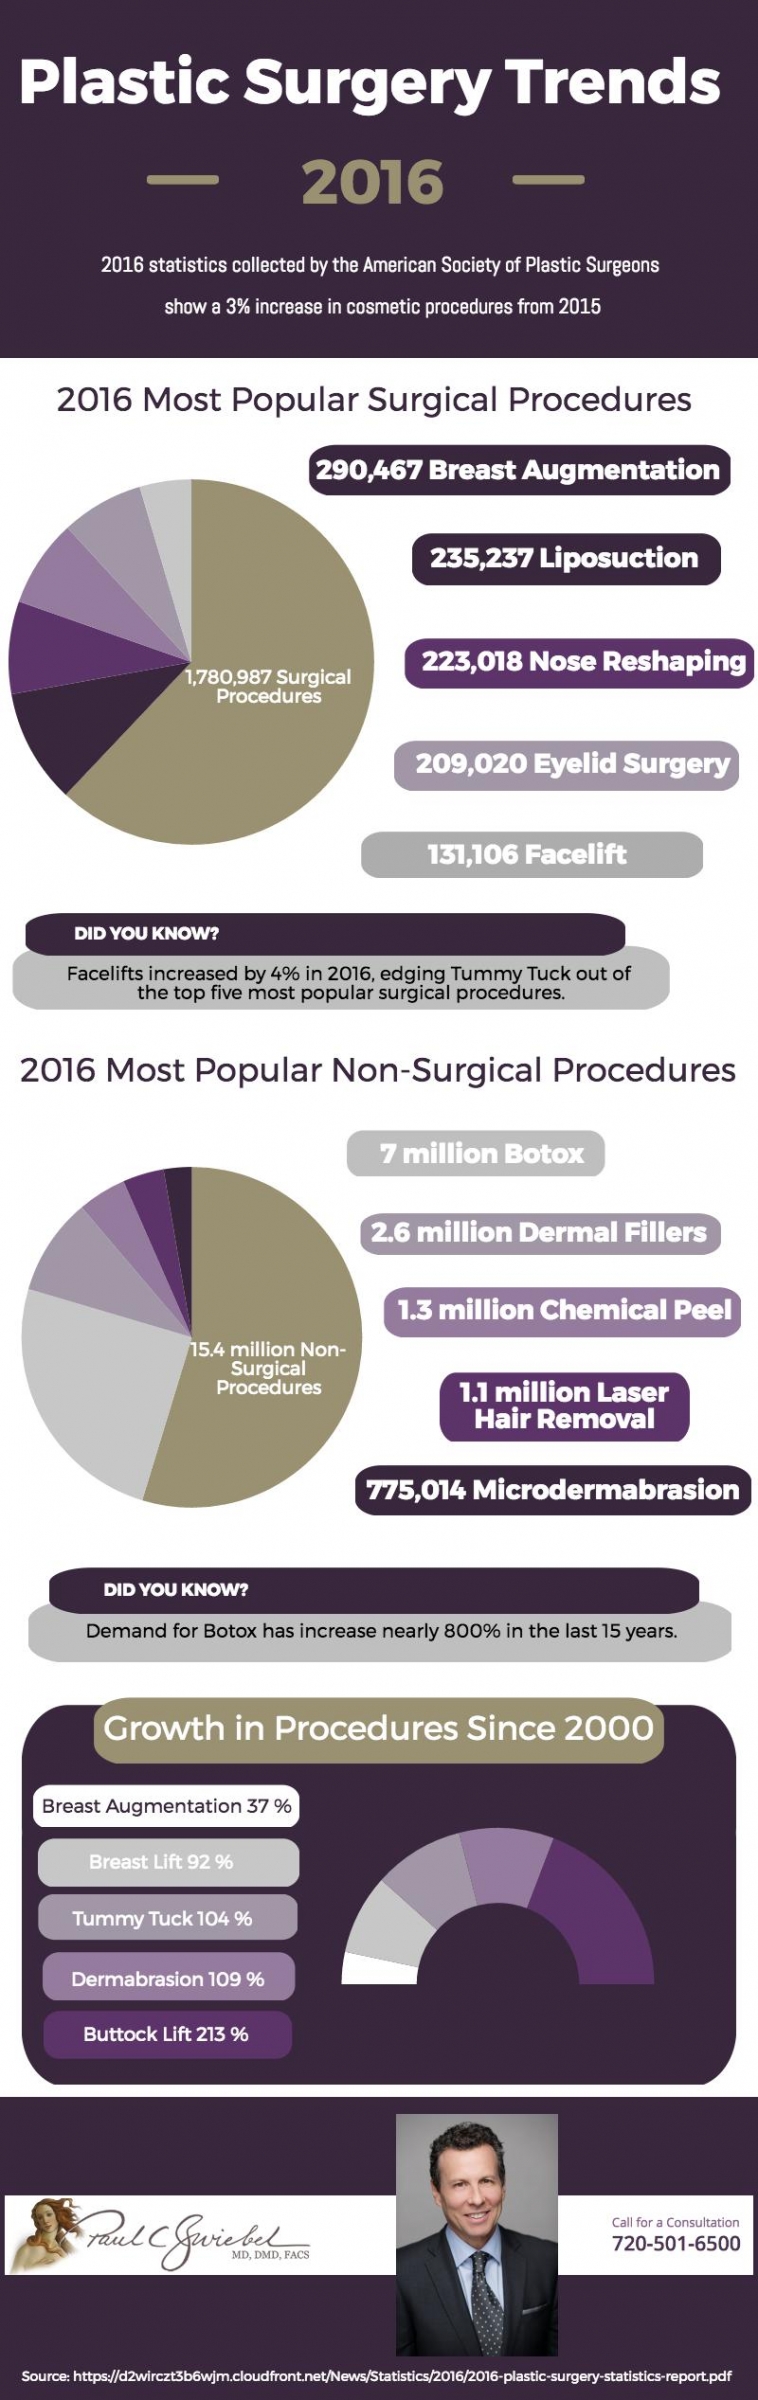 2016 Plastic Surgery Trends